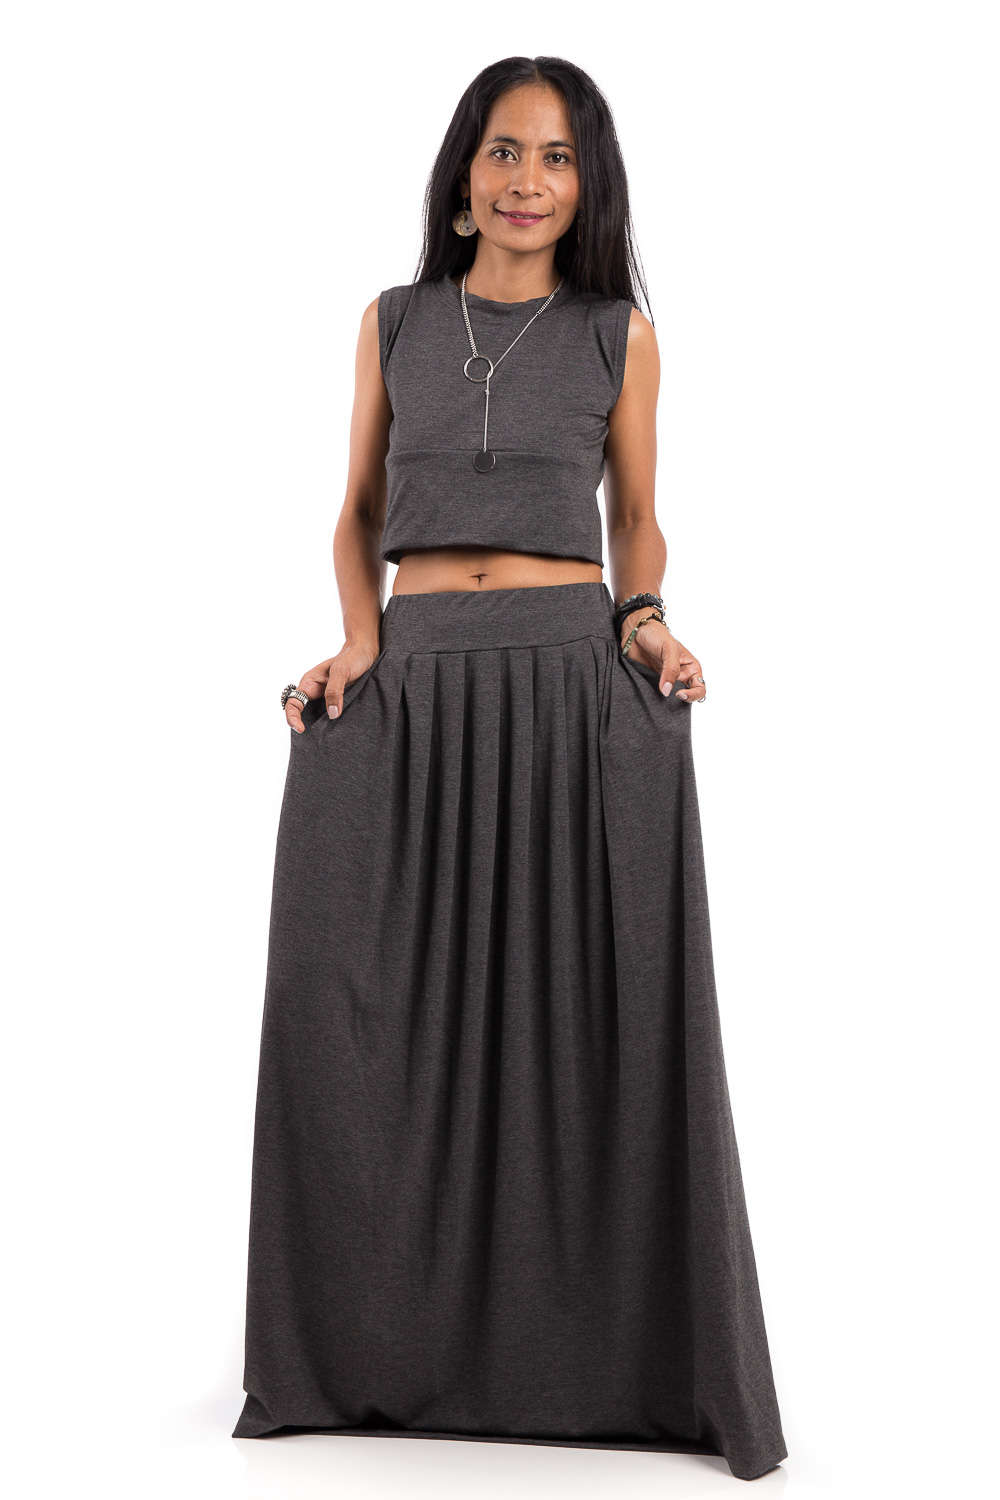 Maxi Skirt Grey Skirt Long Top Grey Skirt : Urban Chic